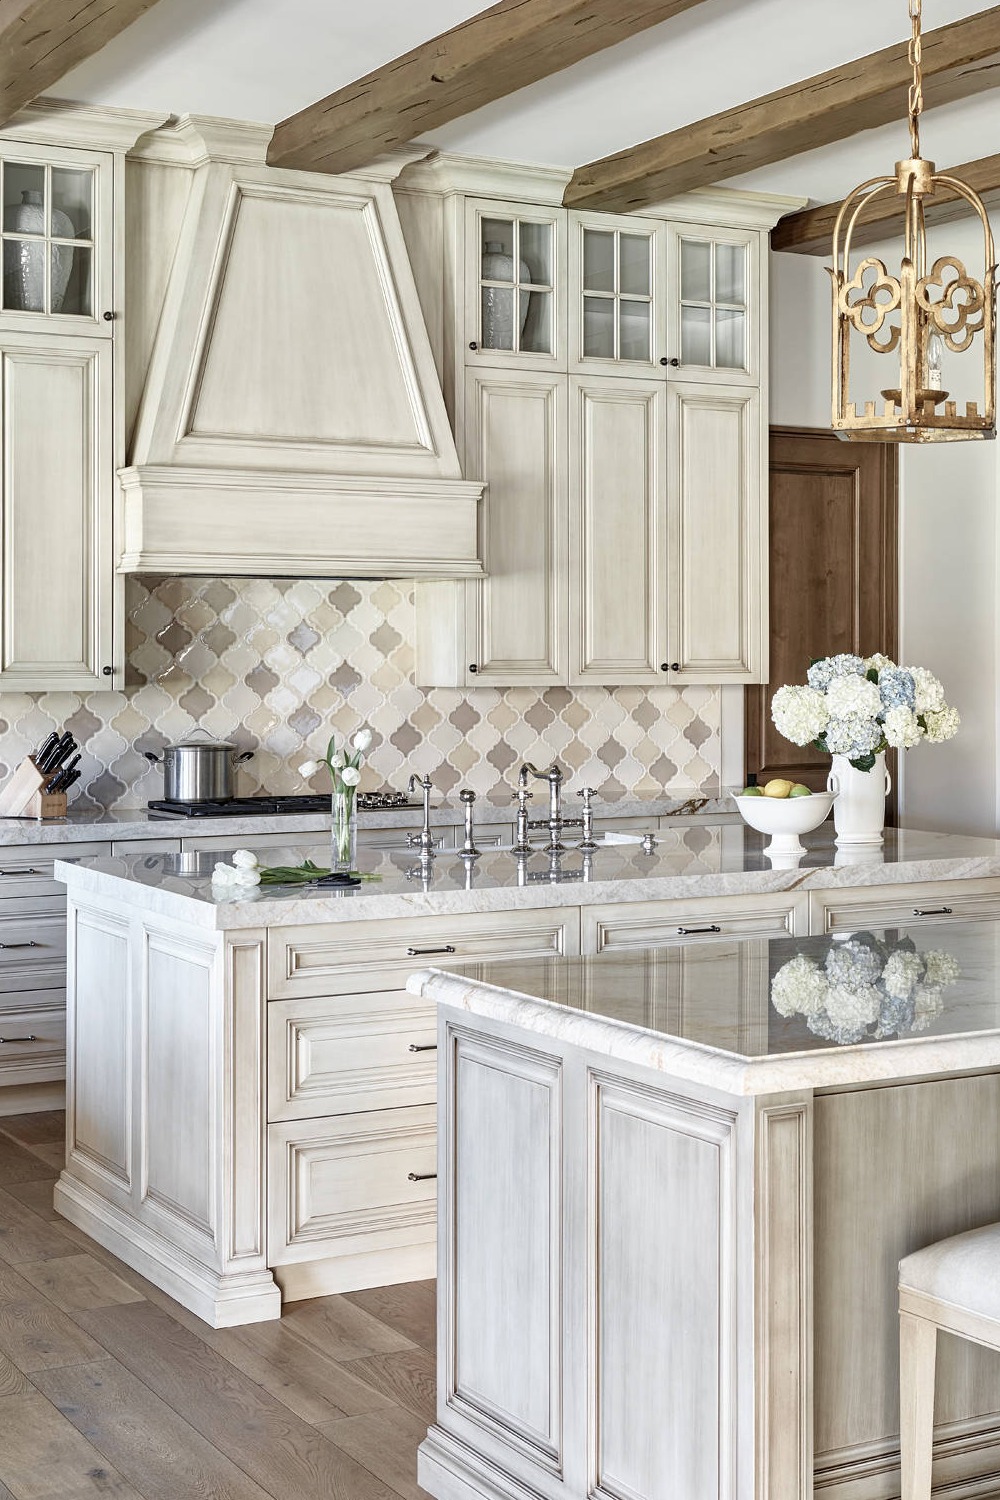 Modern Arabesque Tile Backsplash Grey Cabinets Custom Hood Marble Countertops Accents Built Home Design